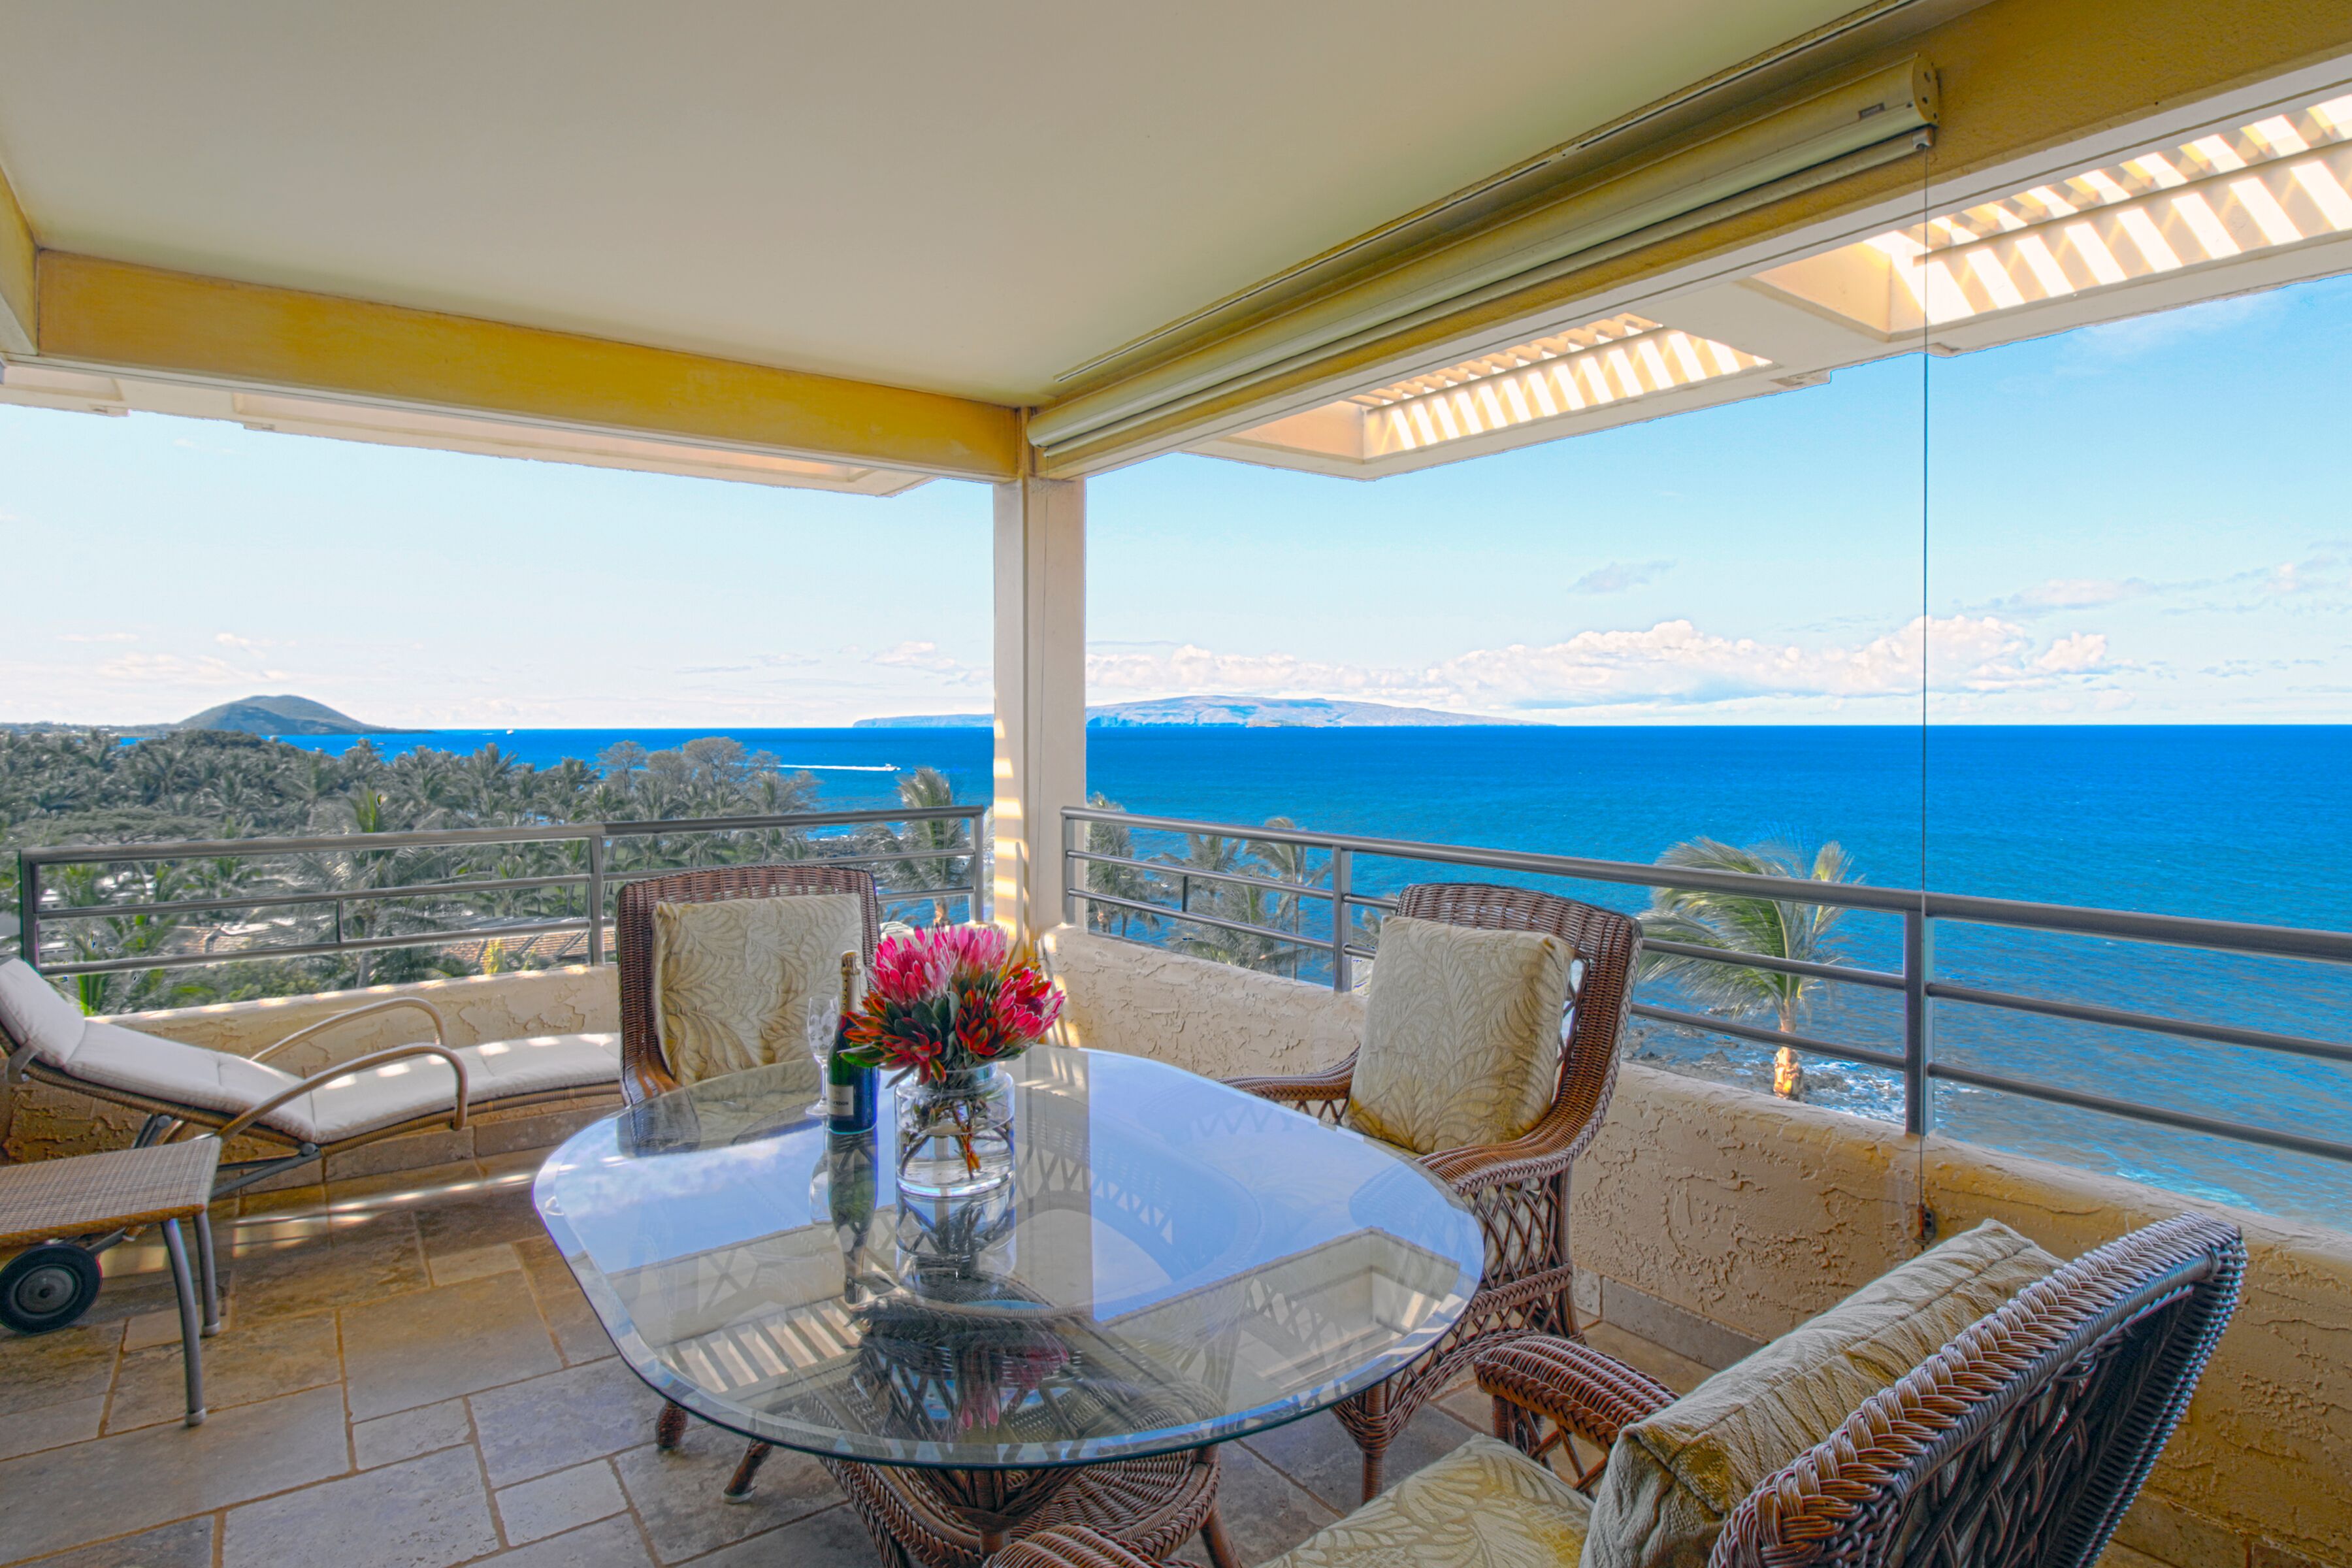 Polo Beach Club Condos For Sale - Maui Real Estate